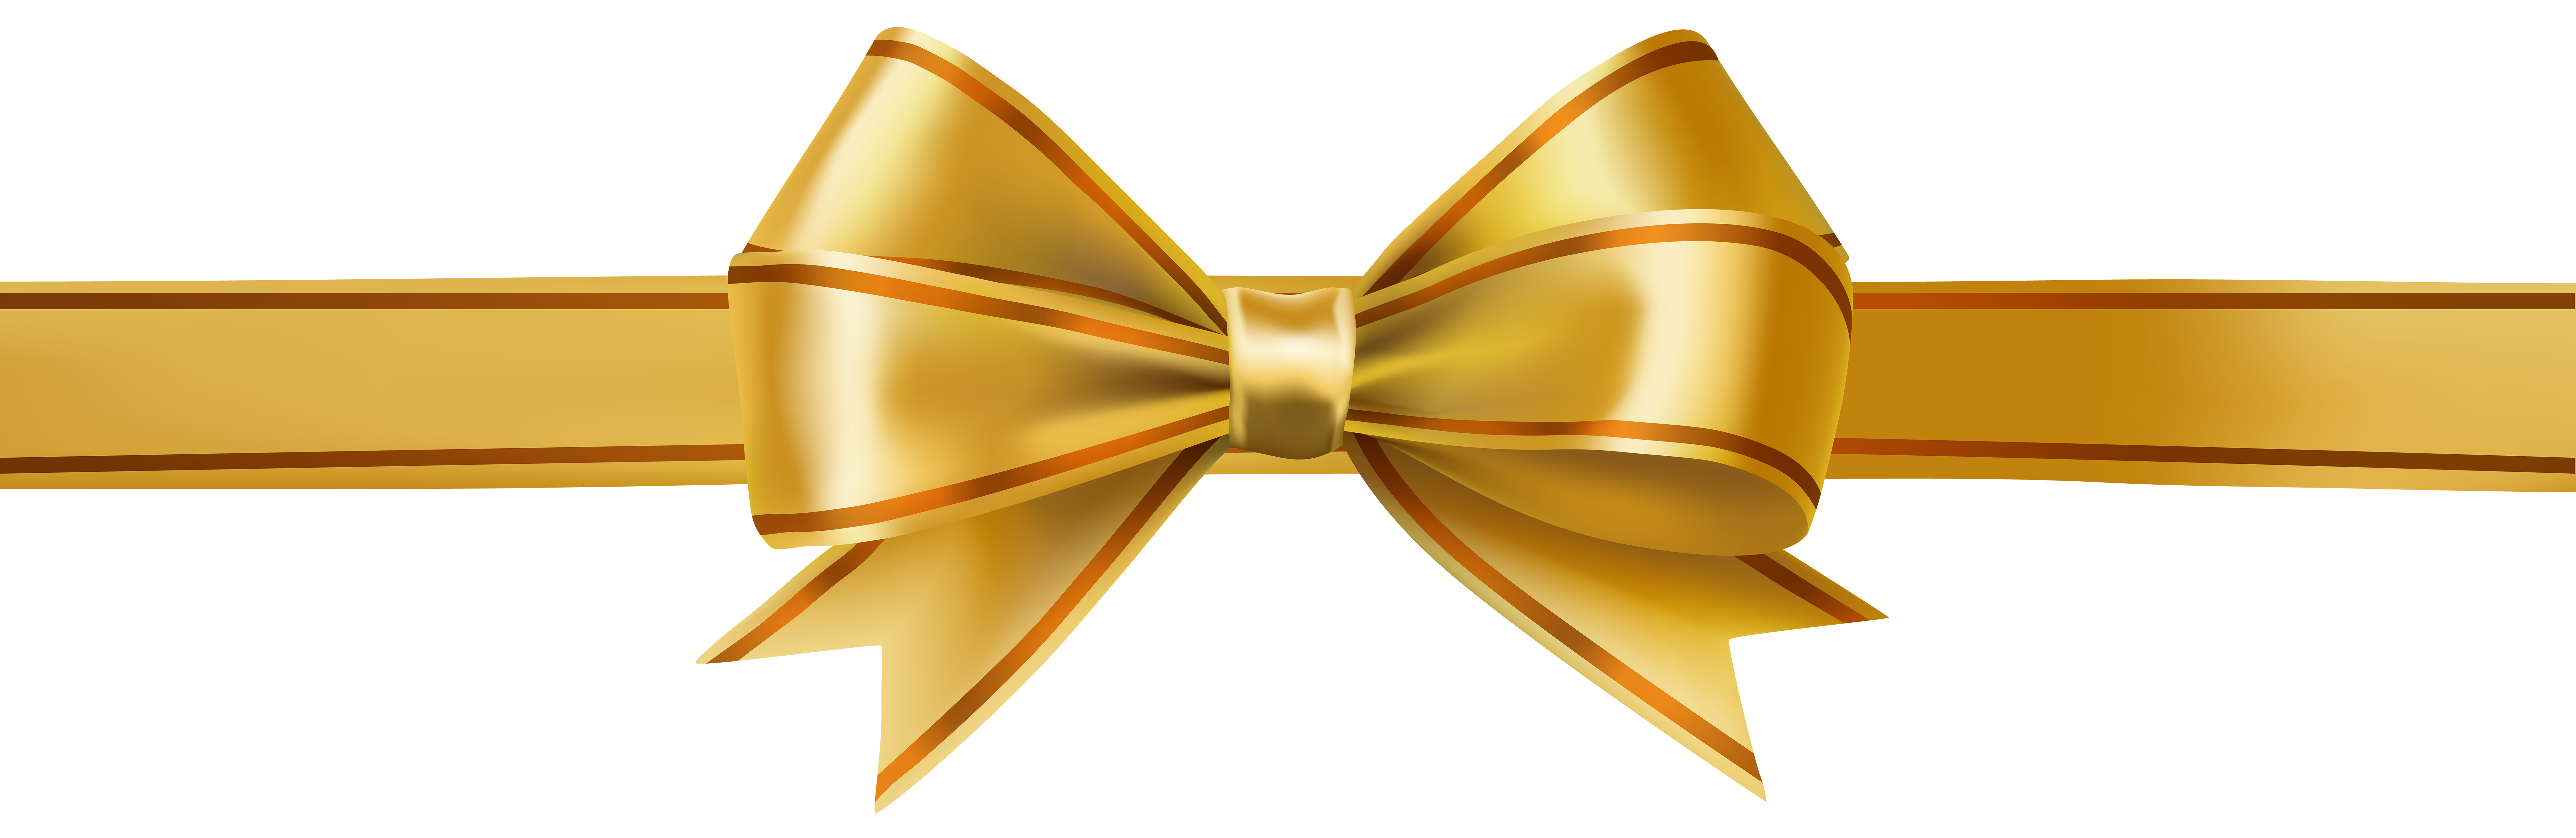 Ribbon clip art golden. Clipart bow button bow